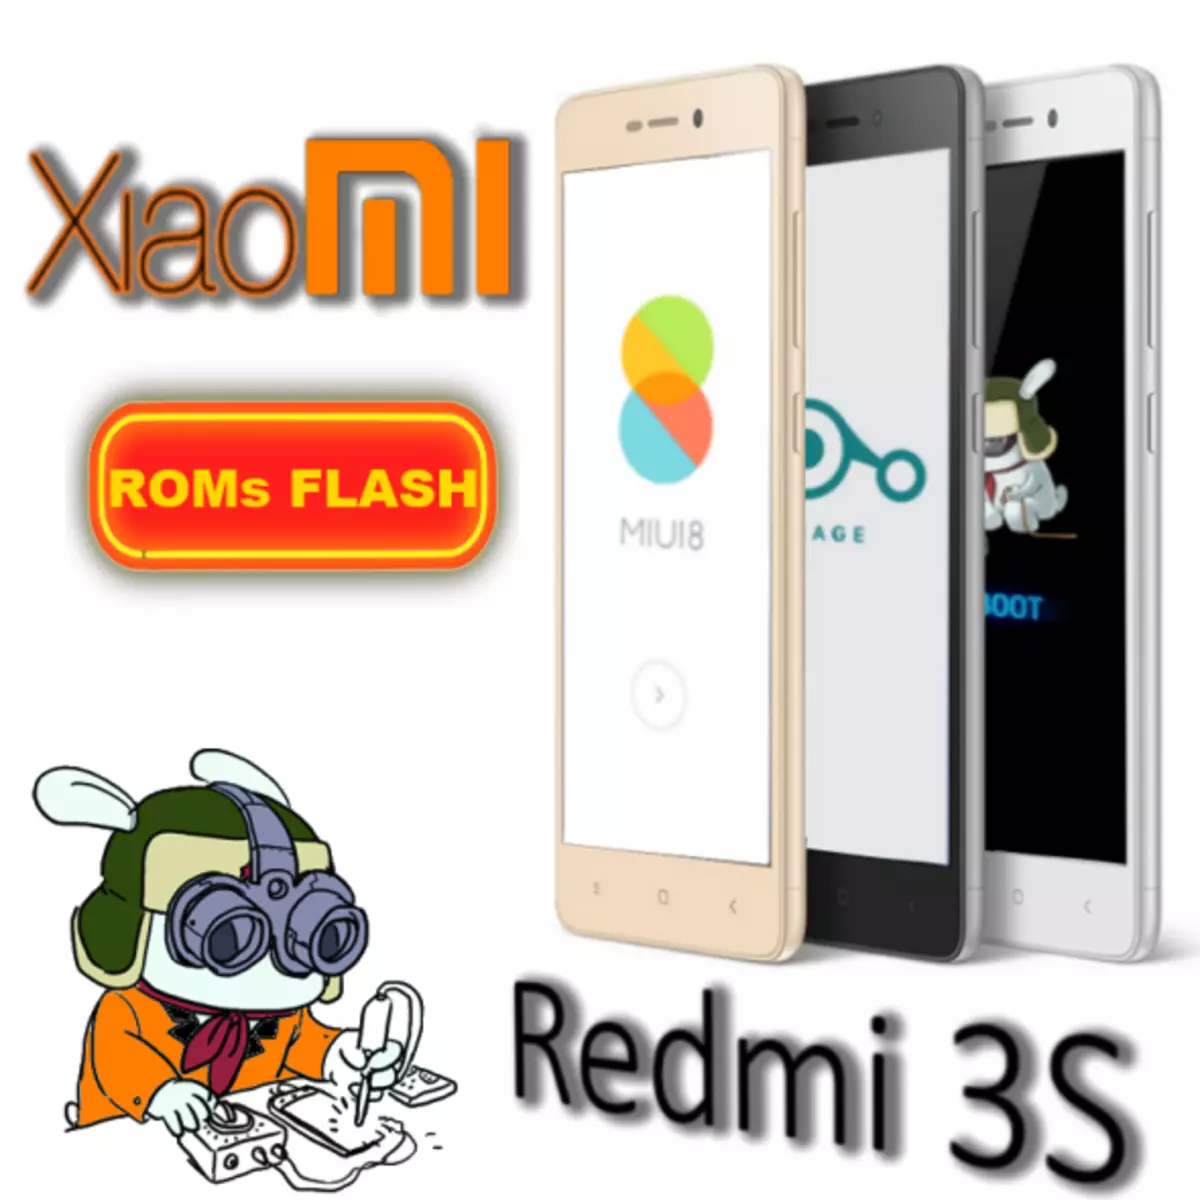 Xiaomi Redmi 3S Firmware.